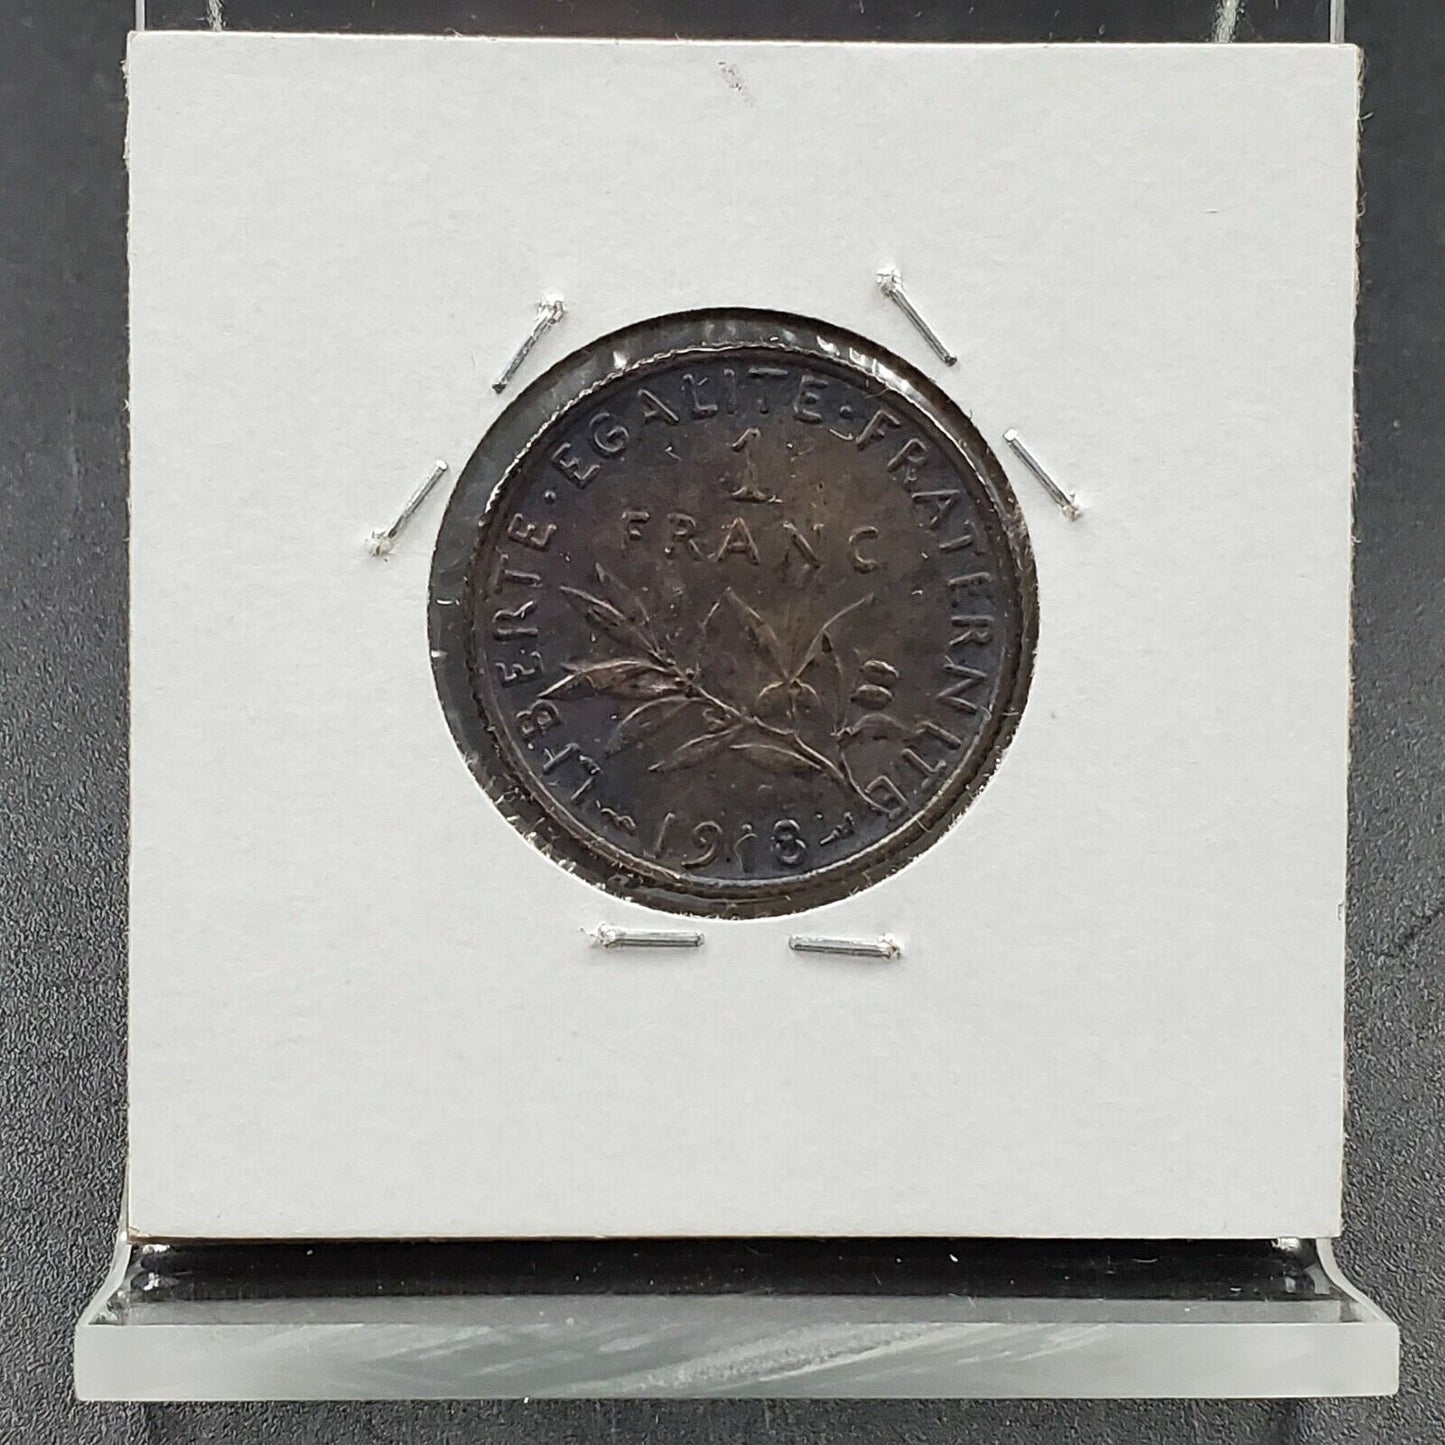 France 1918 1 Franc Silver Coin Neat toning Toner